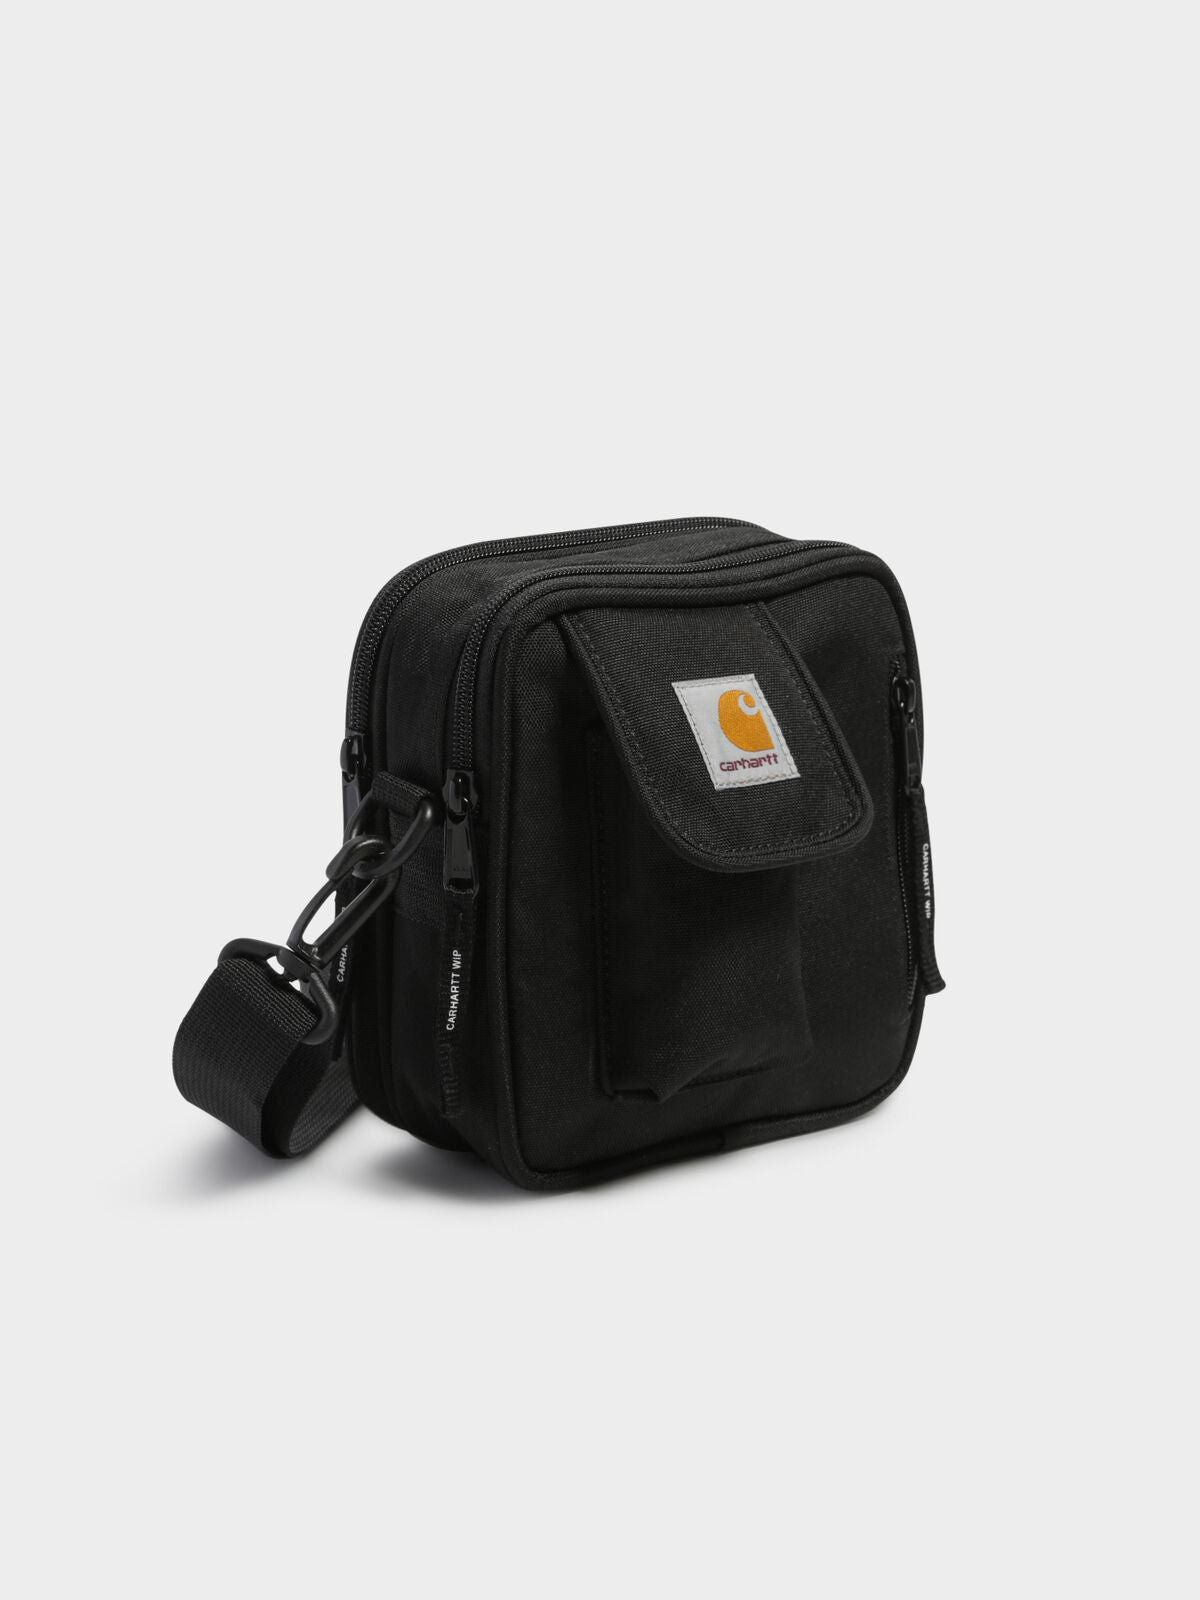 Essentials Small Cross Body Bag in Black